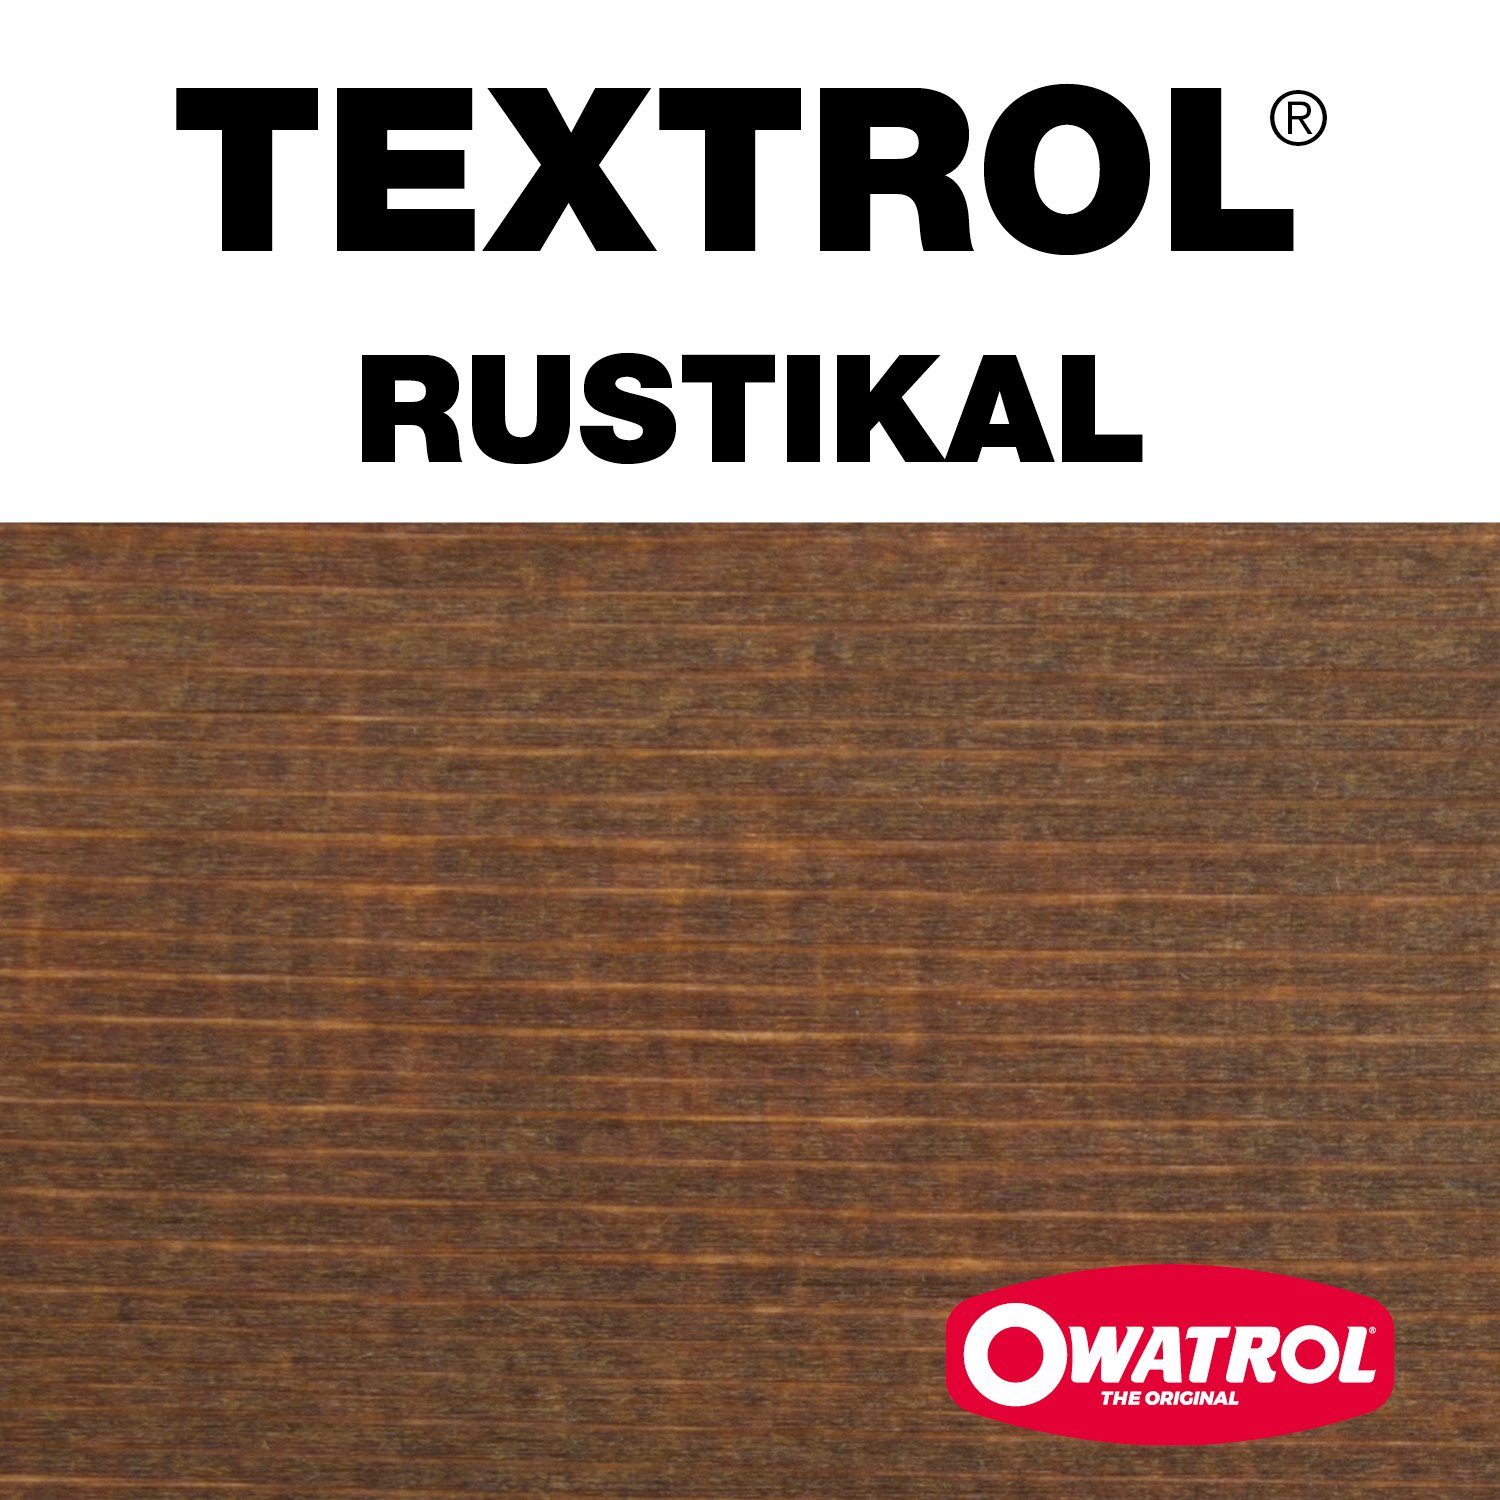 - Holzöl [5L] den Holzöl rustikal für Außenbereich OWATROL TEXTROL